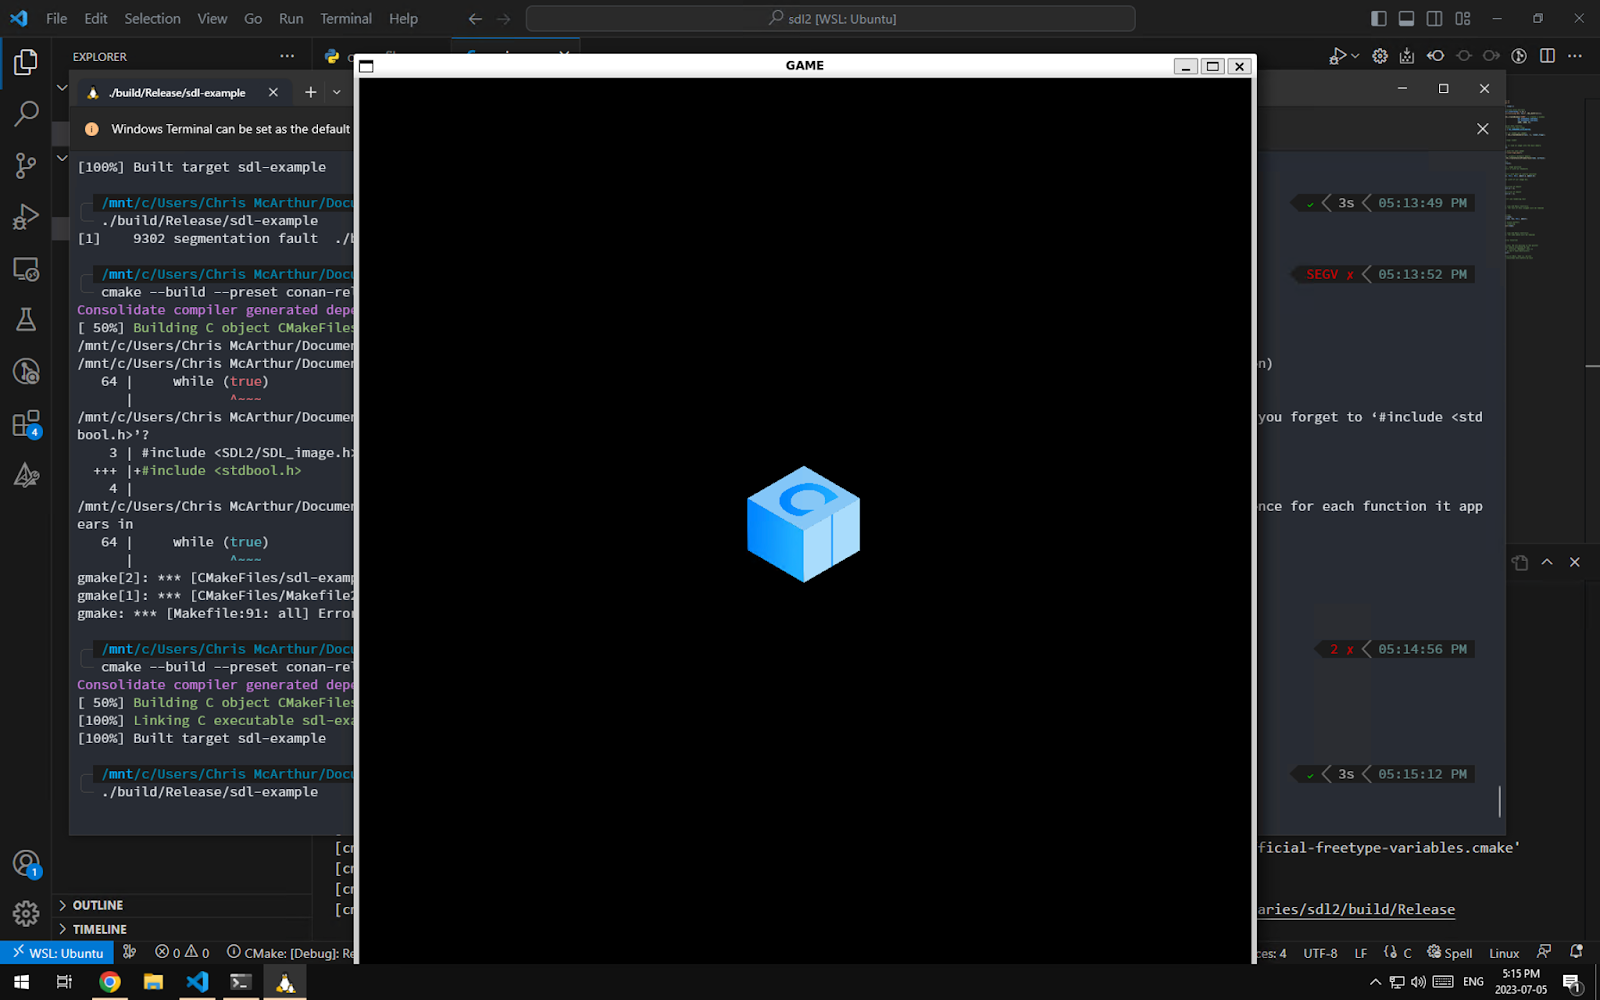 basic game window with a Conan 2.0 logo cube center